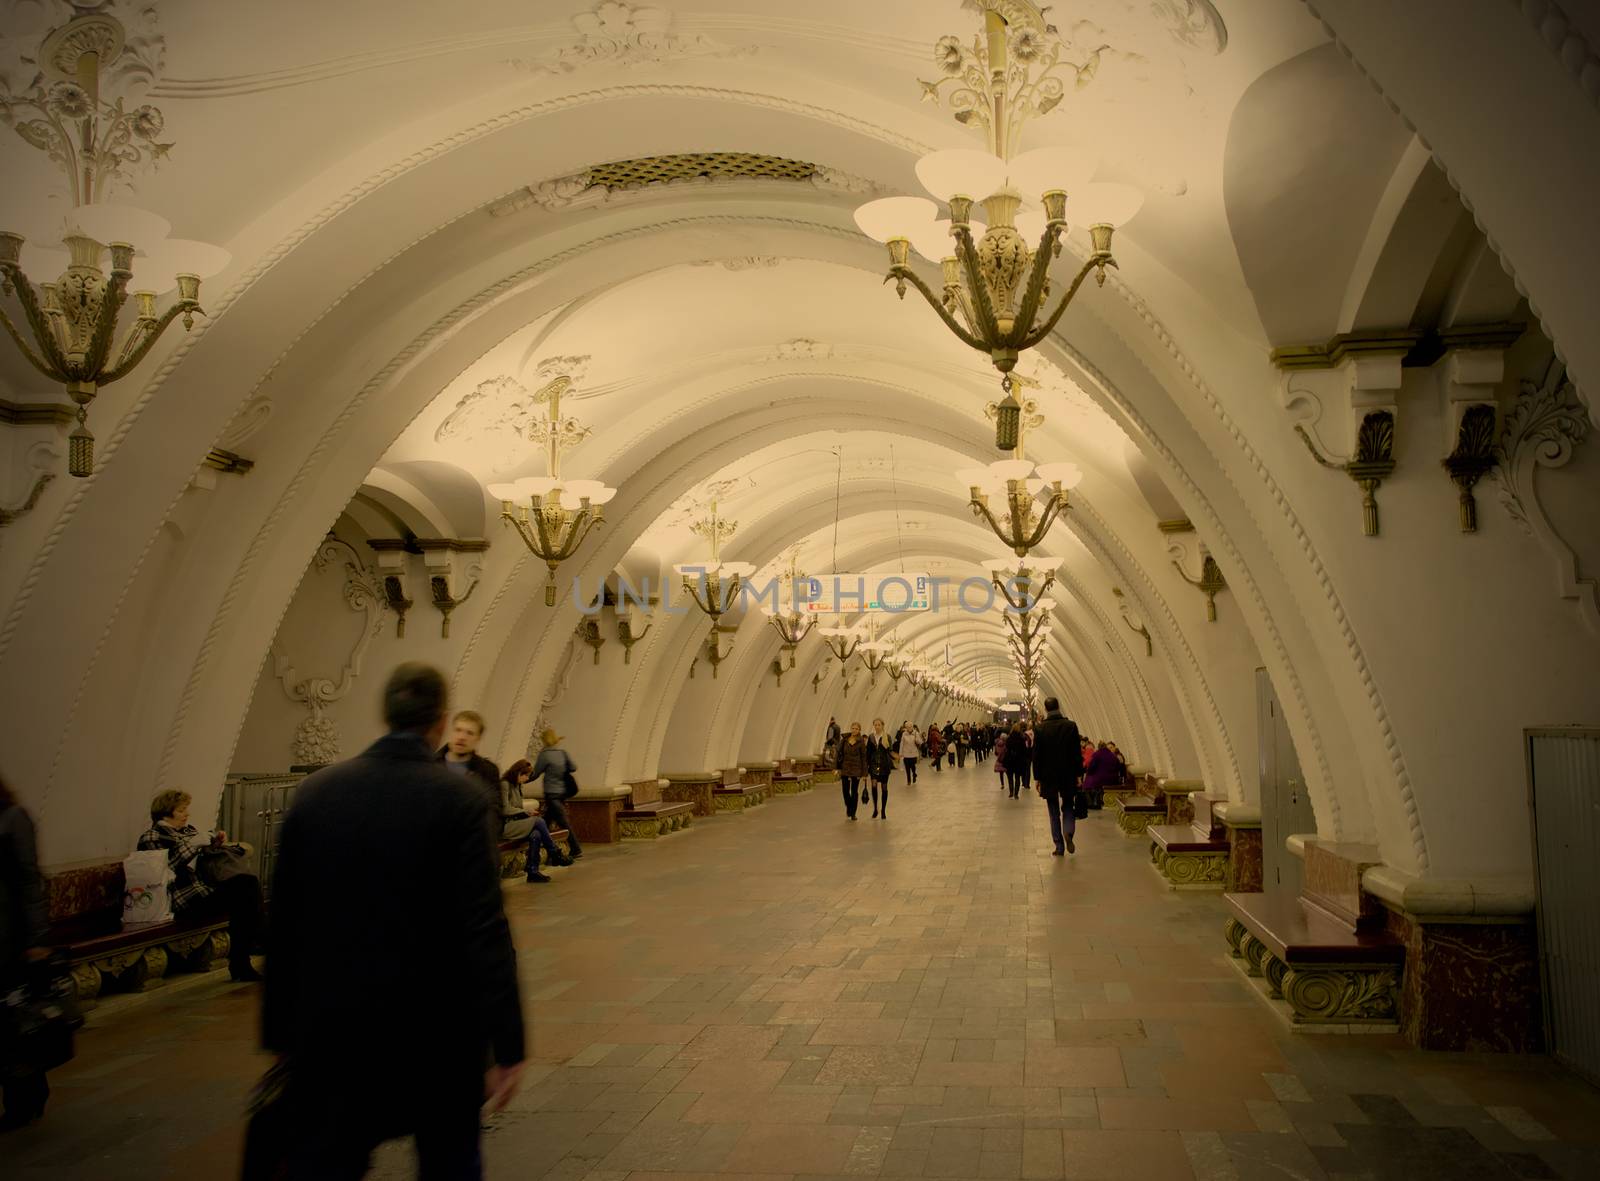 Moscow metro station Arbatskaya by Astroid